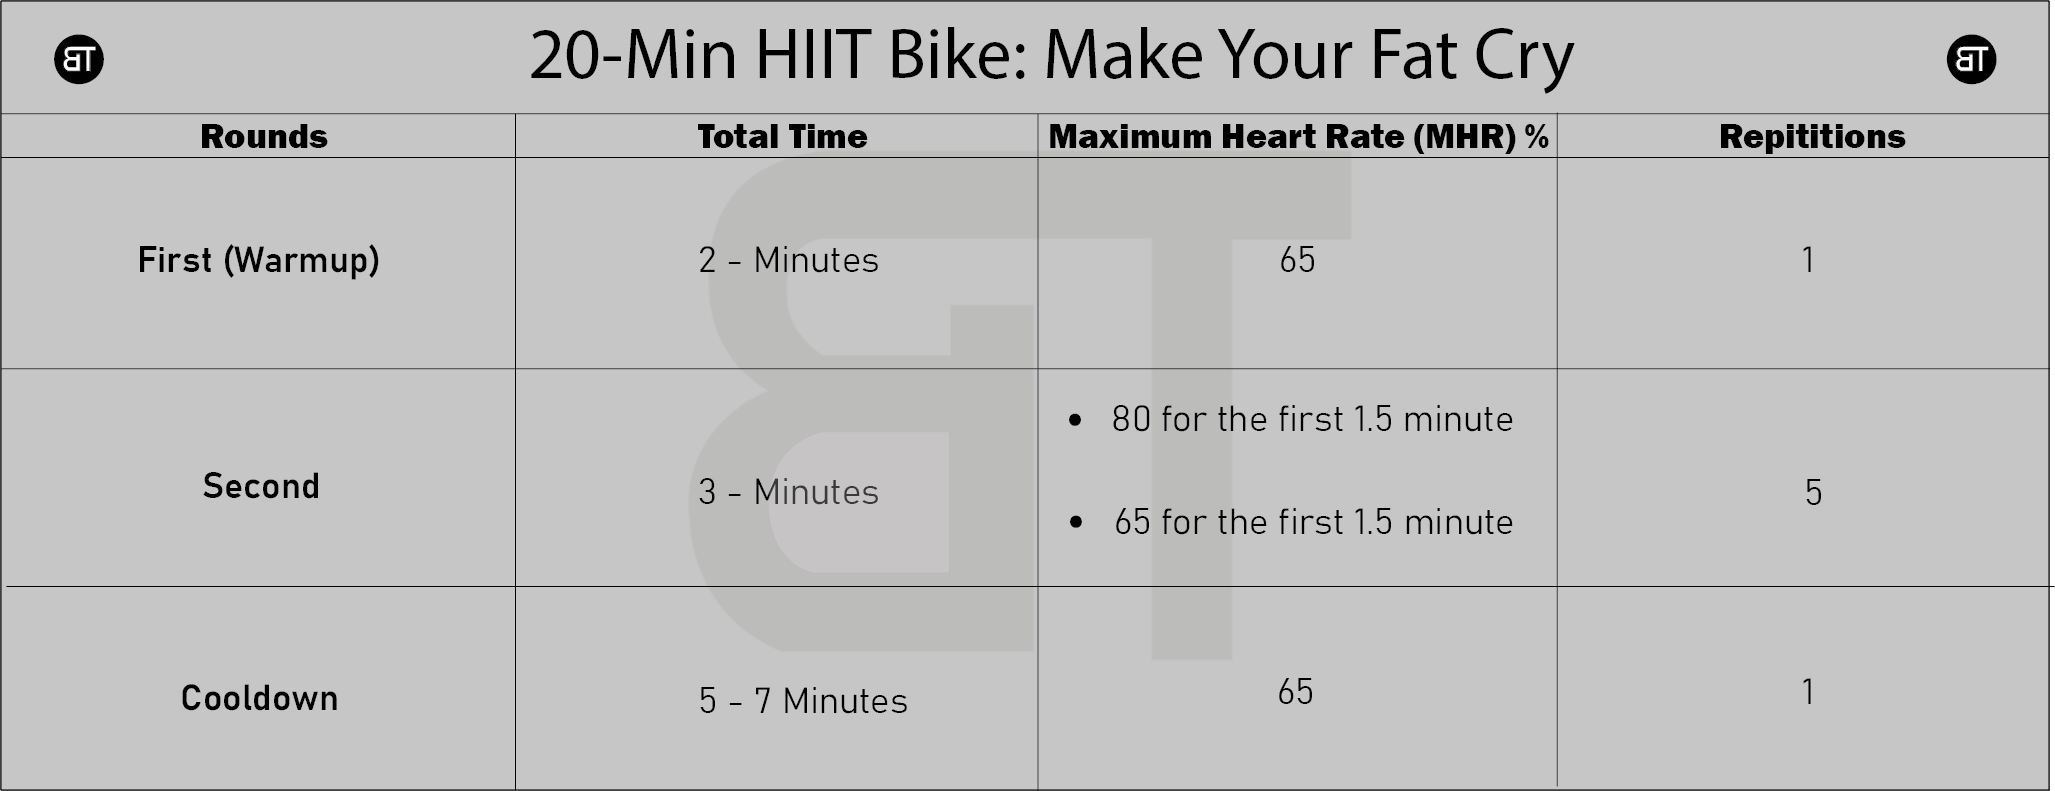 20 Min HIIT Bike Make Your Fat Cry